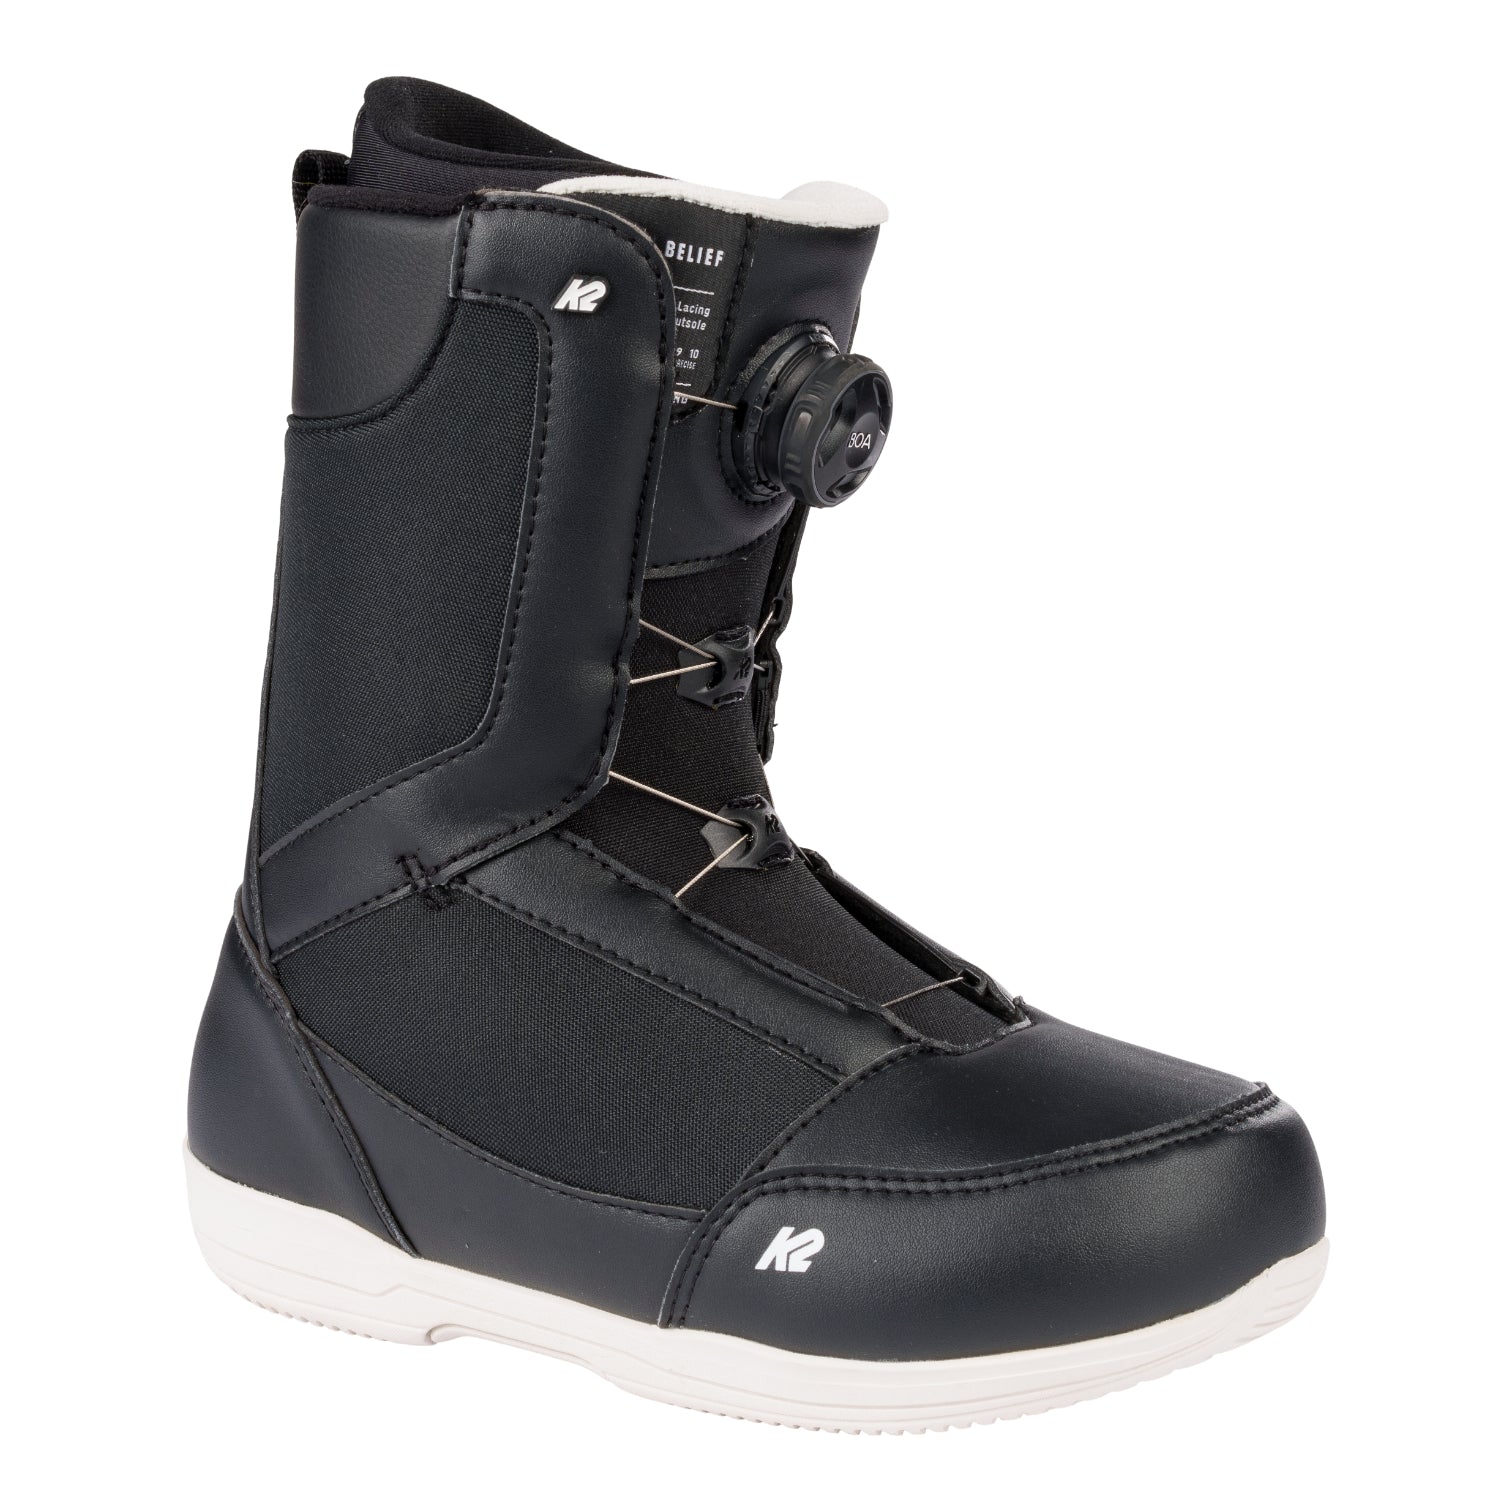 Snowboard Boots – aspect /